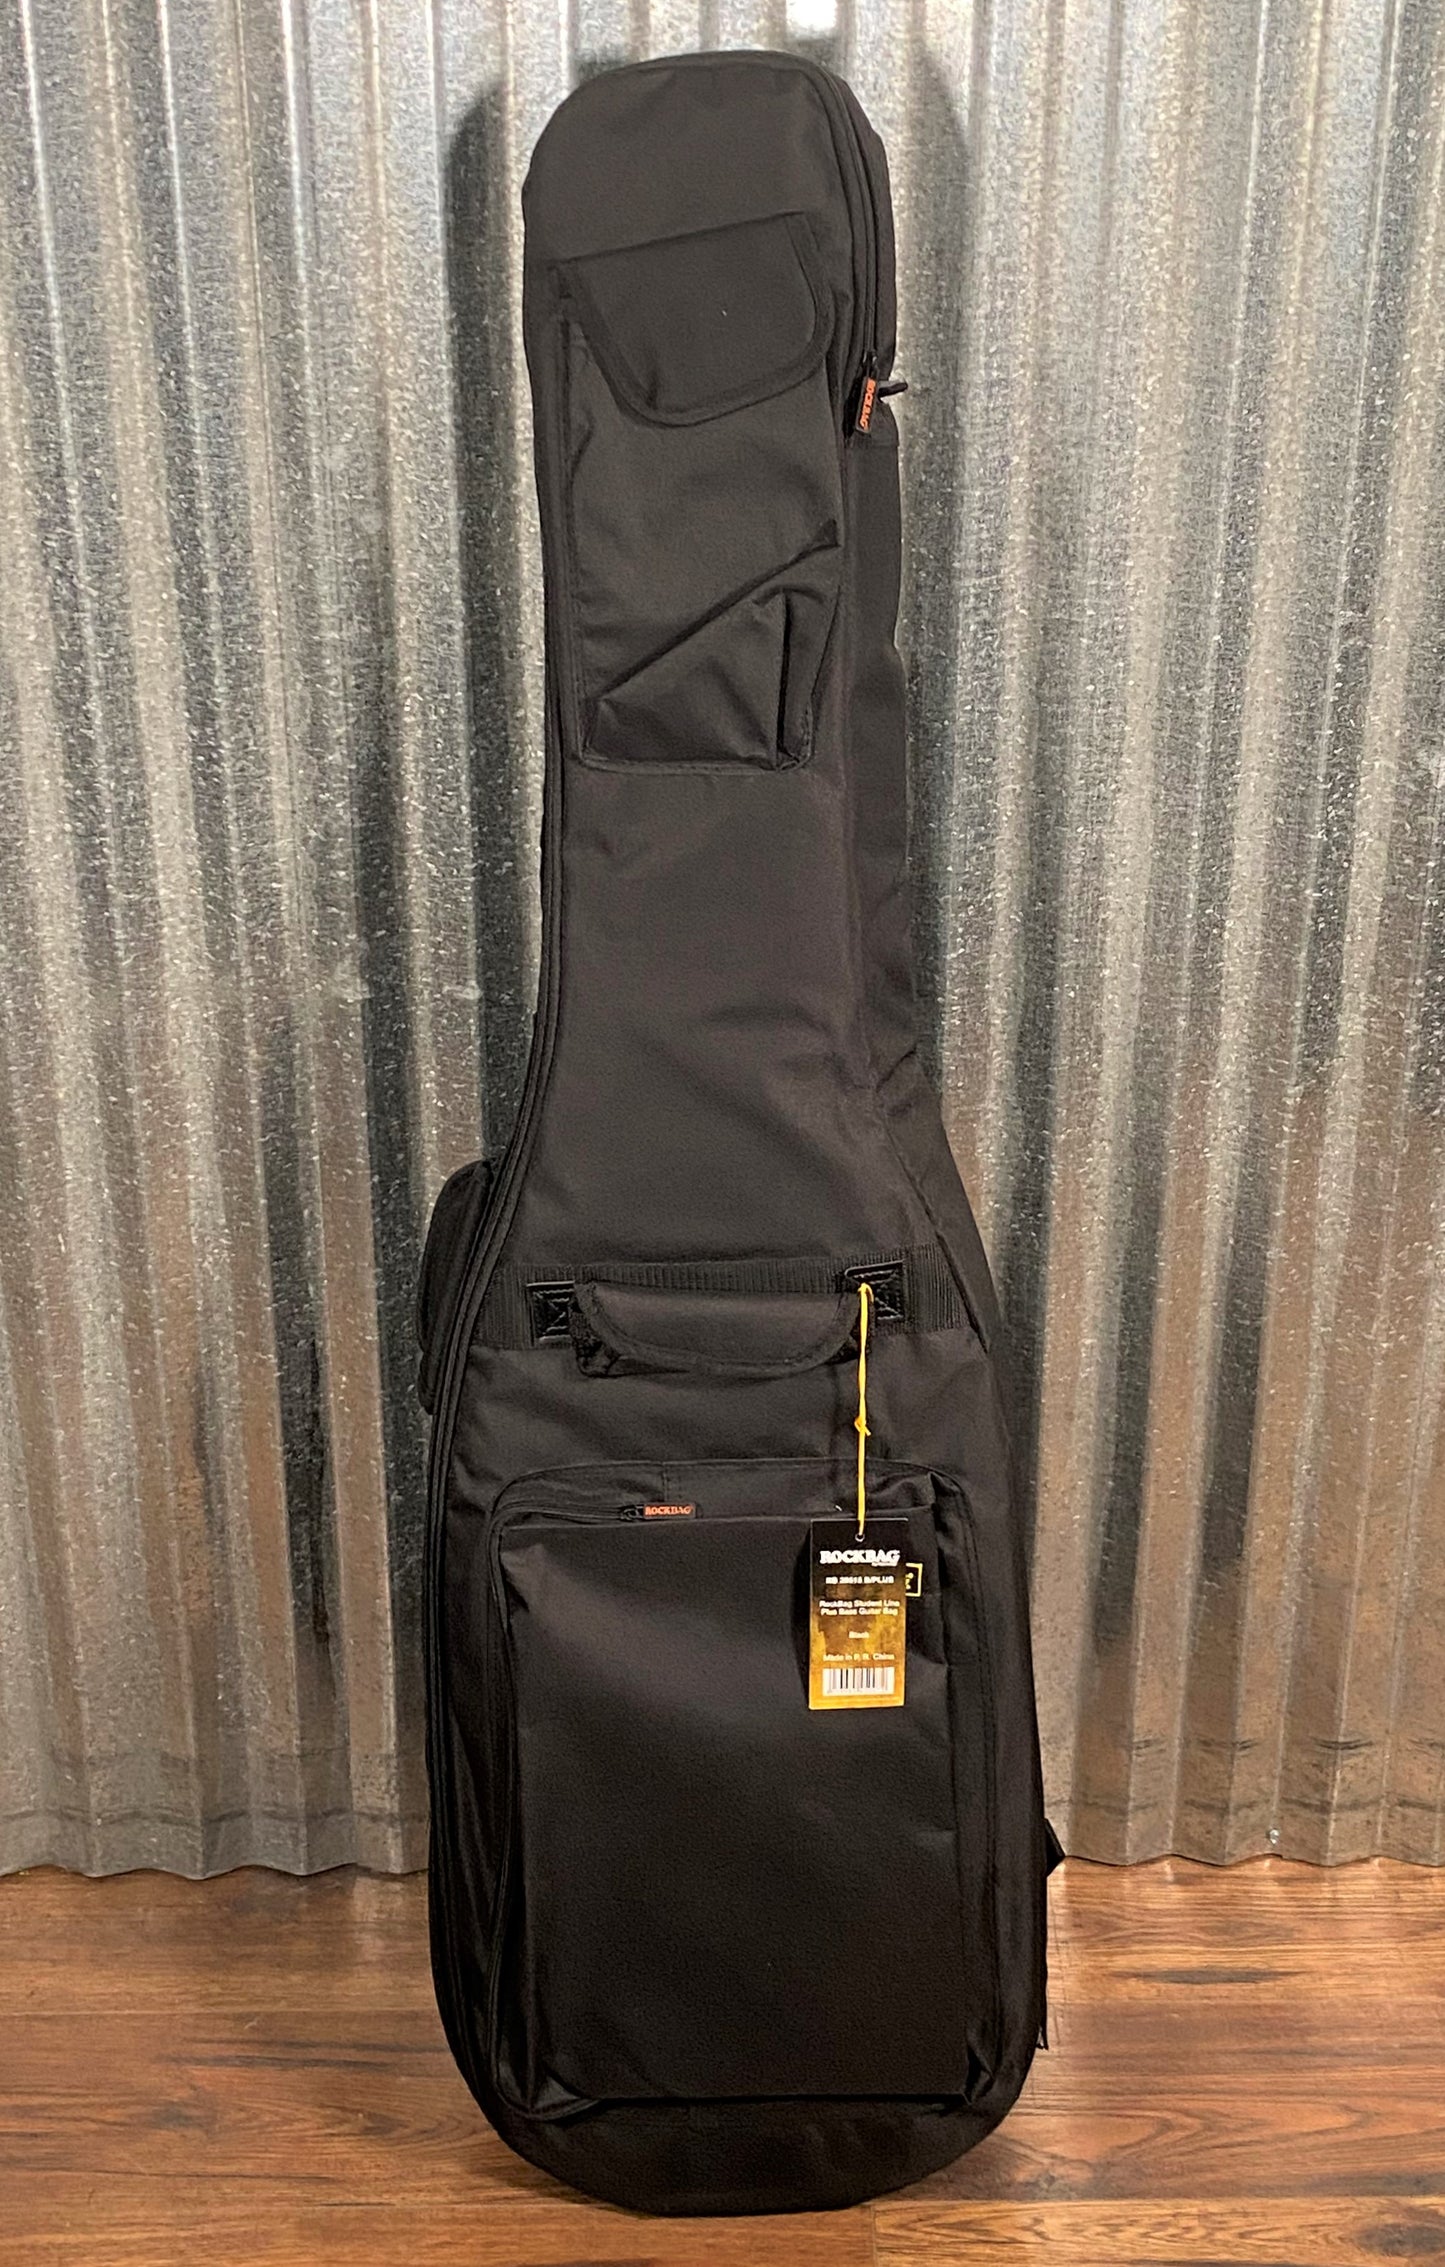 Warwick RockBass Streamer NT I 4 String Fretless Bass Natural & Bag #9822